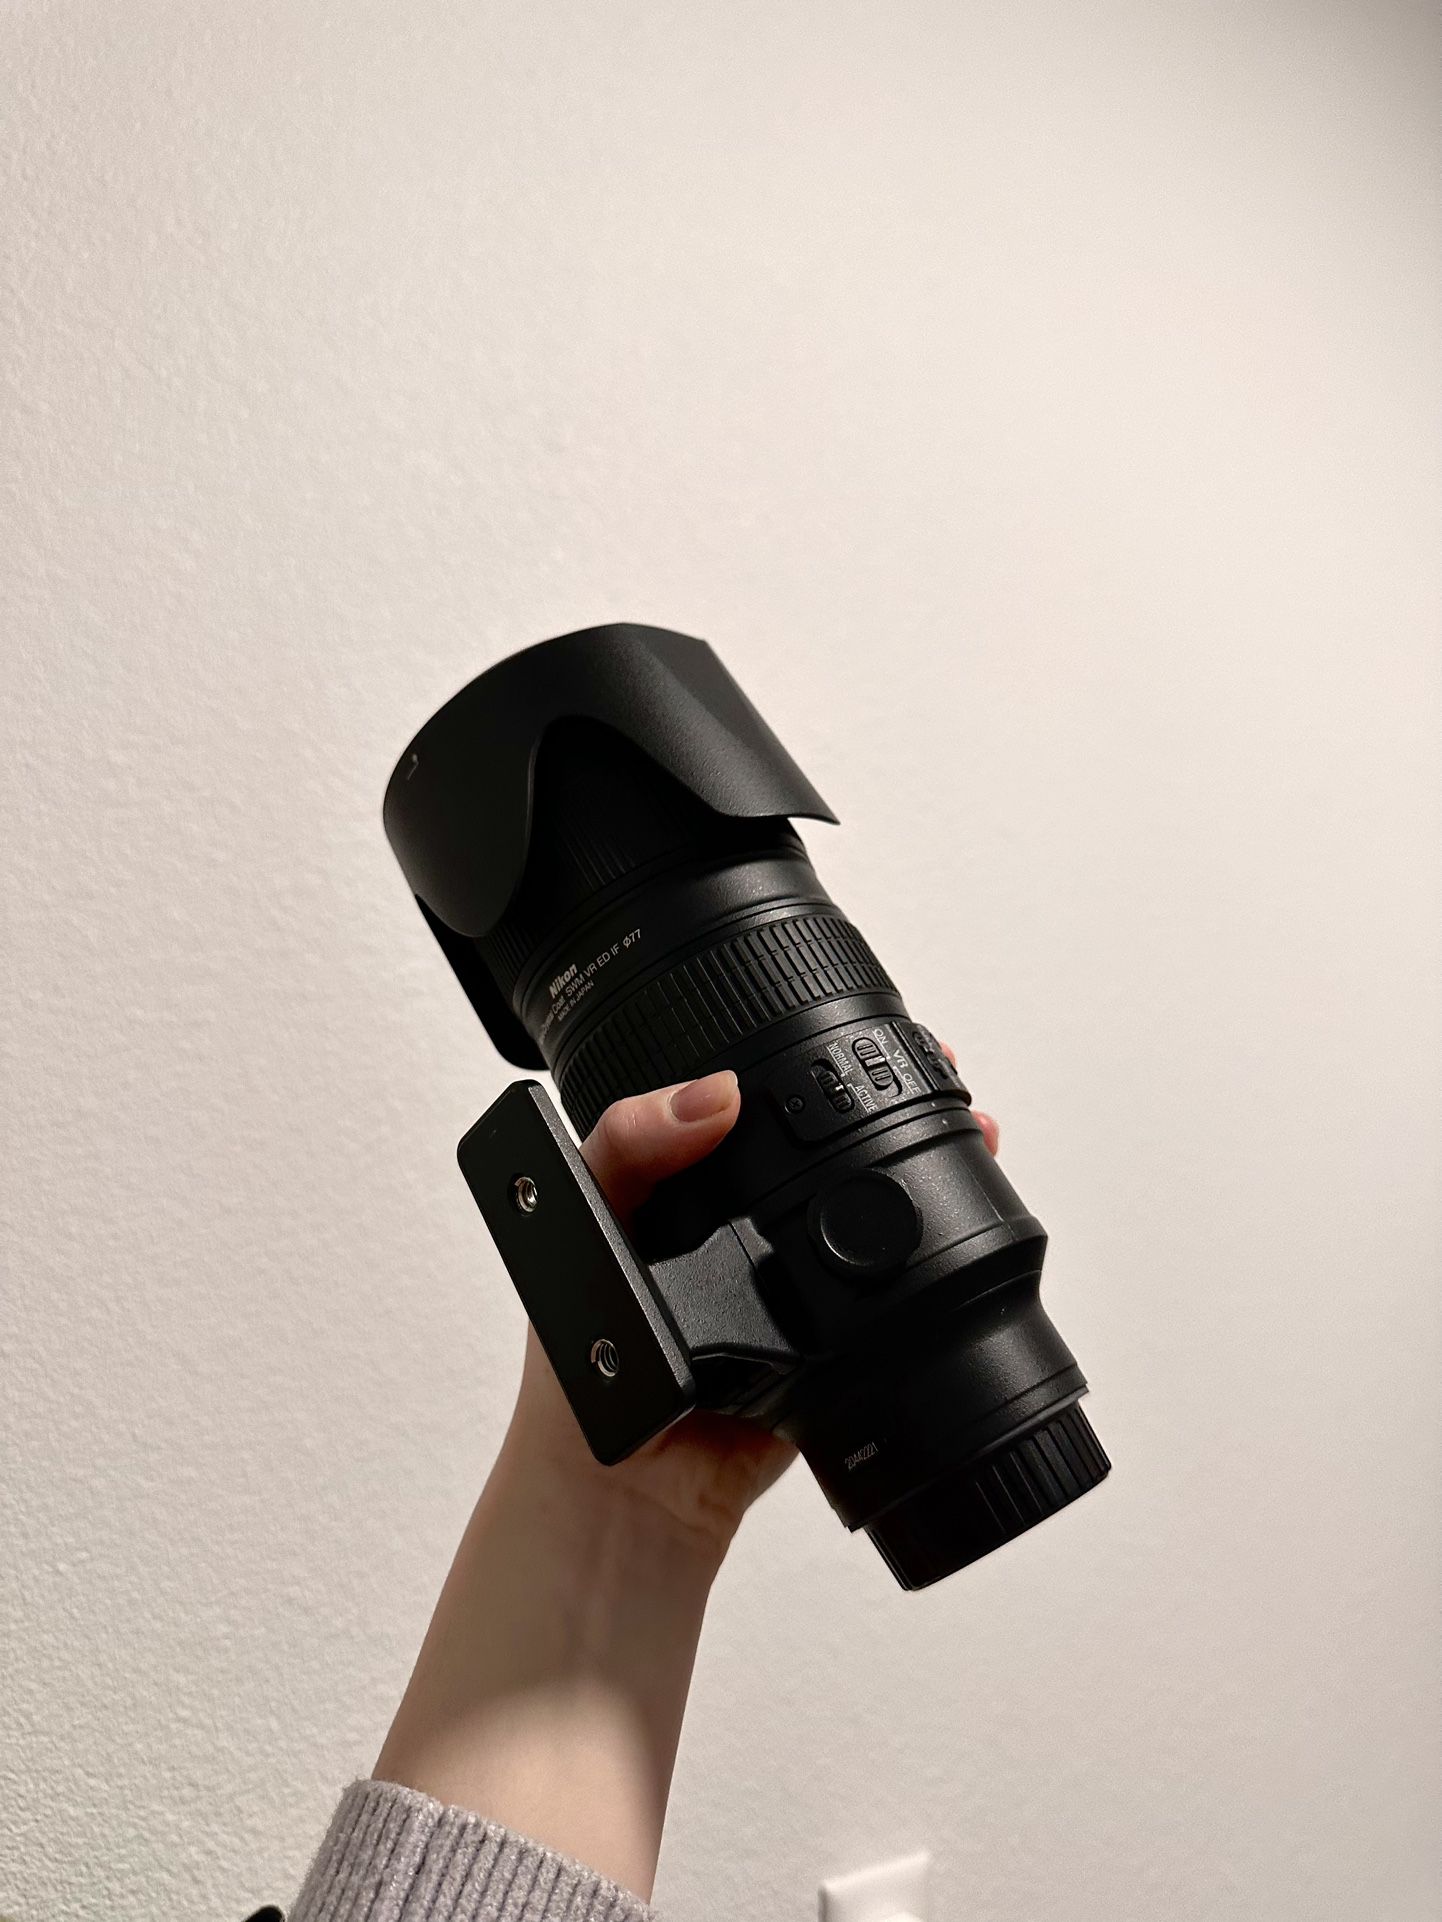 Nikon 70-200mm Lens